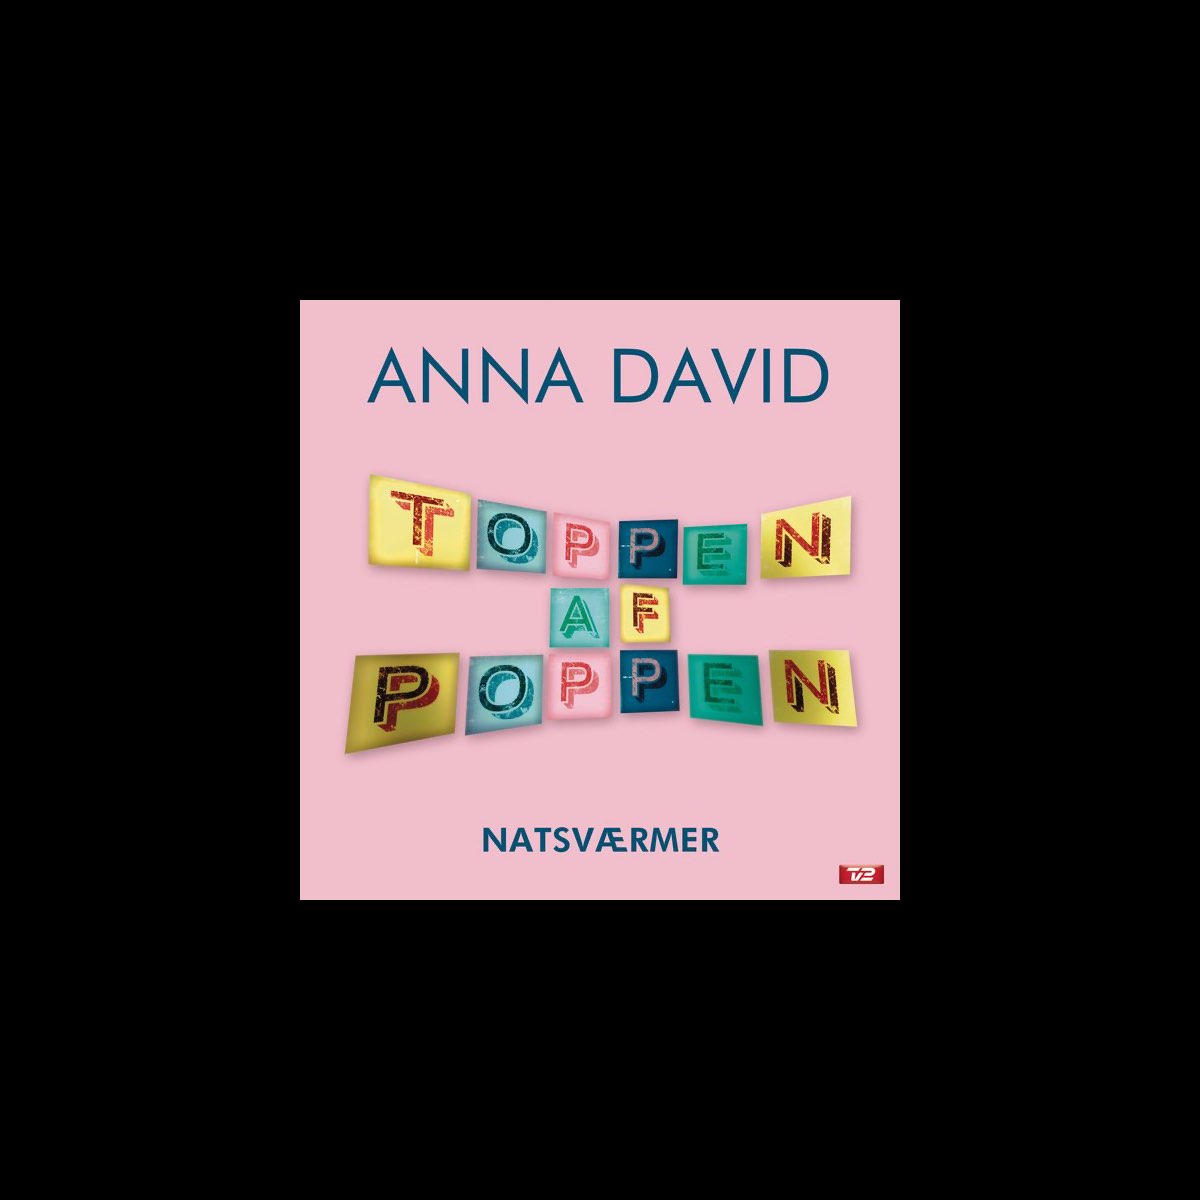 bunke Sociologi solnedgang Natsværmer (Toppen af Poppen) - Single by Anna David on Apple Music